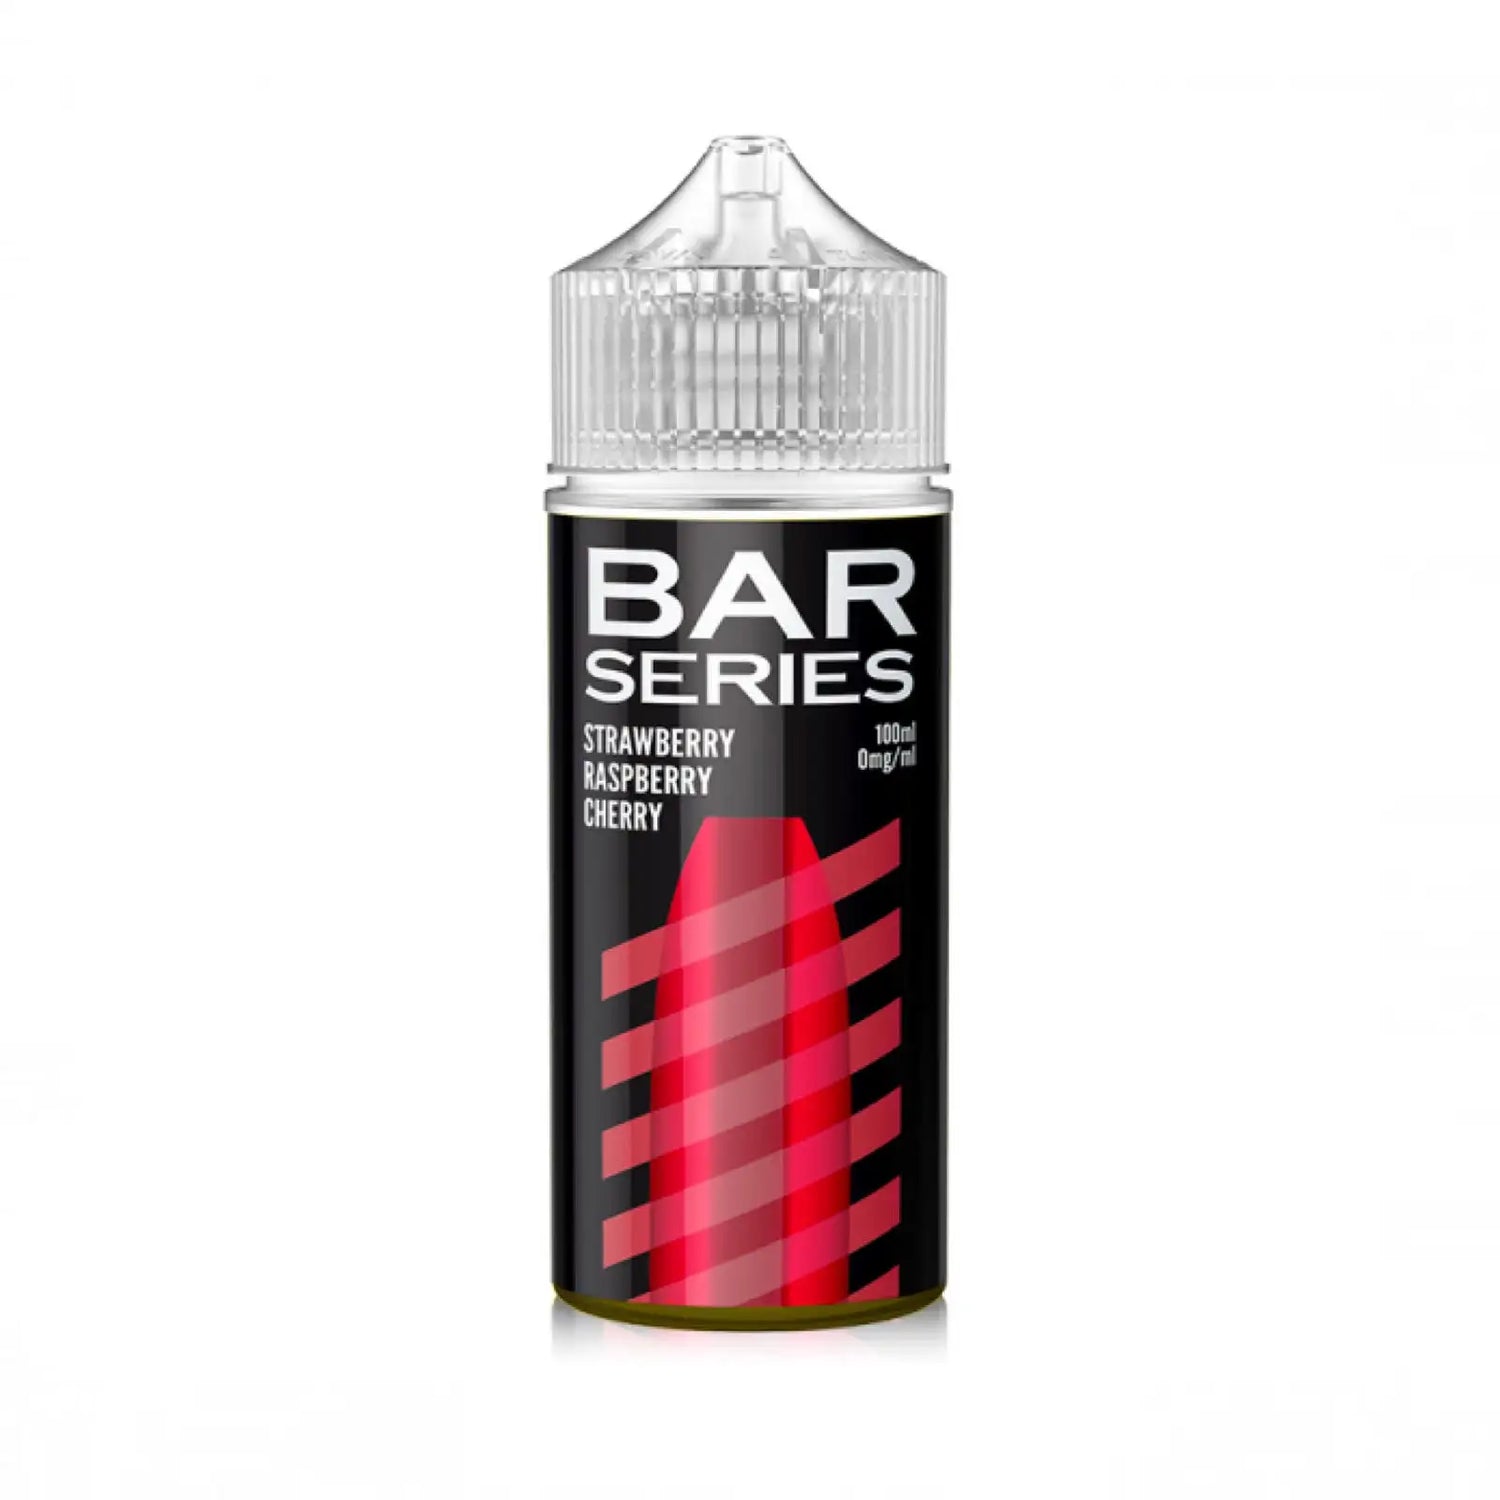 Bar Series Shortfill - Strawberry Raspberry Cherry - 100ml - Bar Series - E-Liquid - Rolling Refills